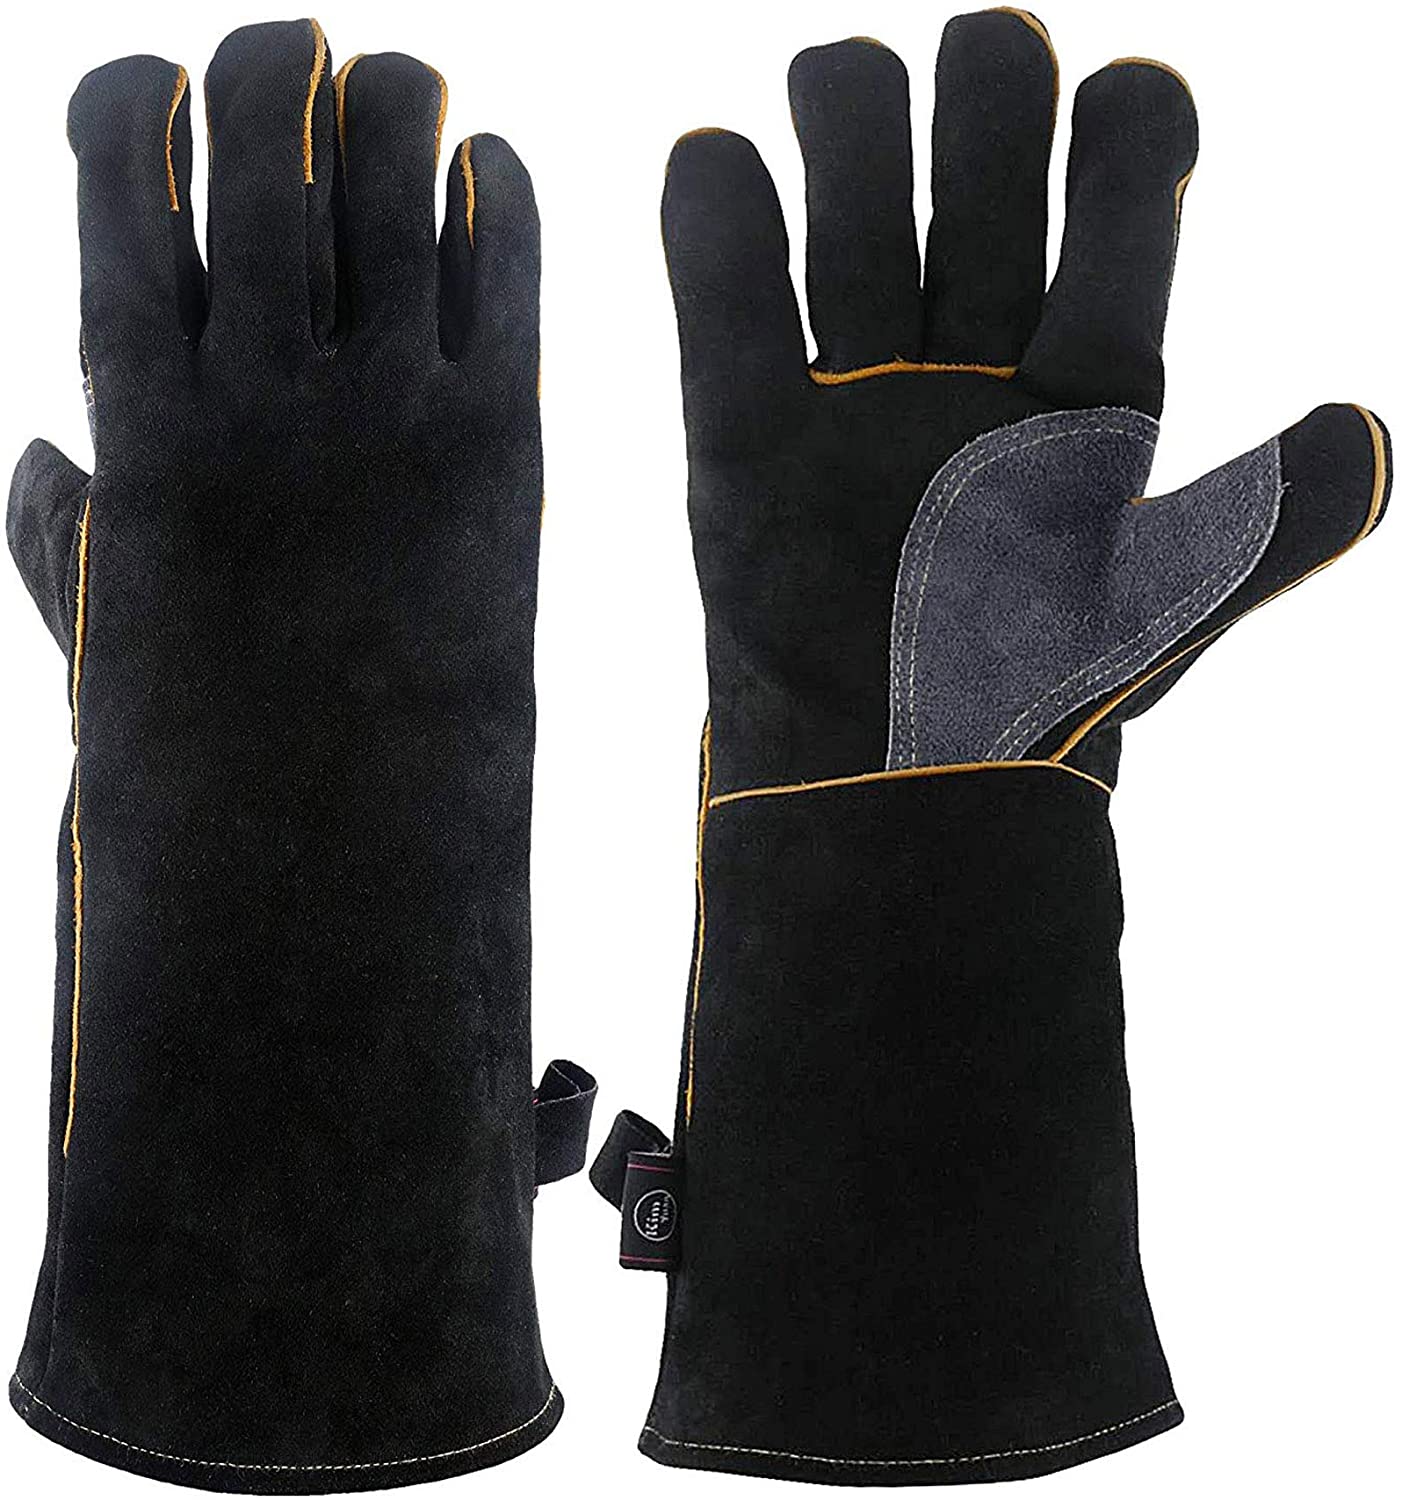 KIM YUAN Flexible Cotton Lined Fireplace Gloves